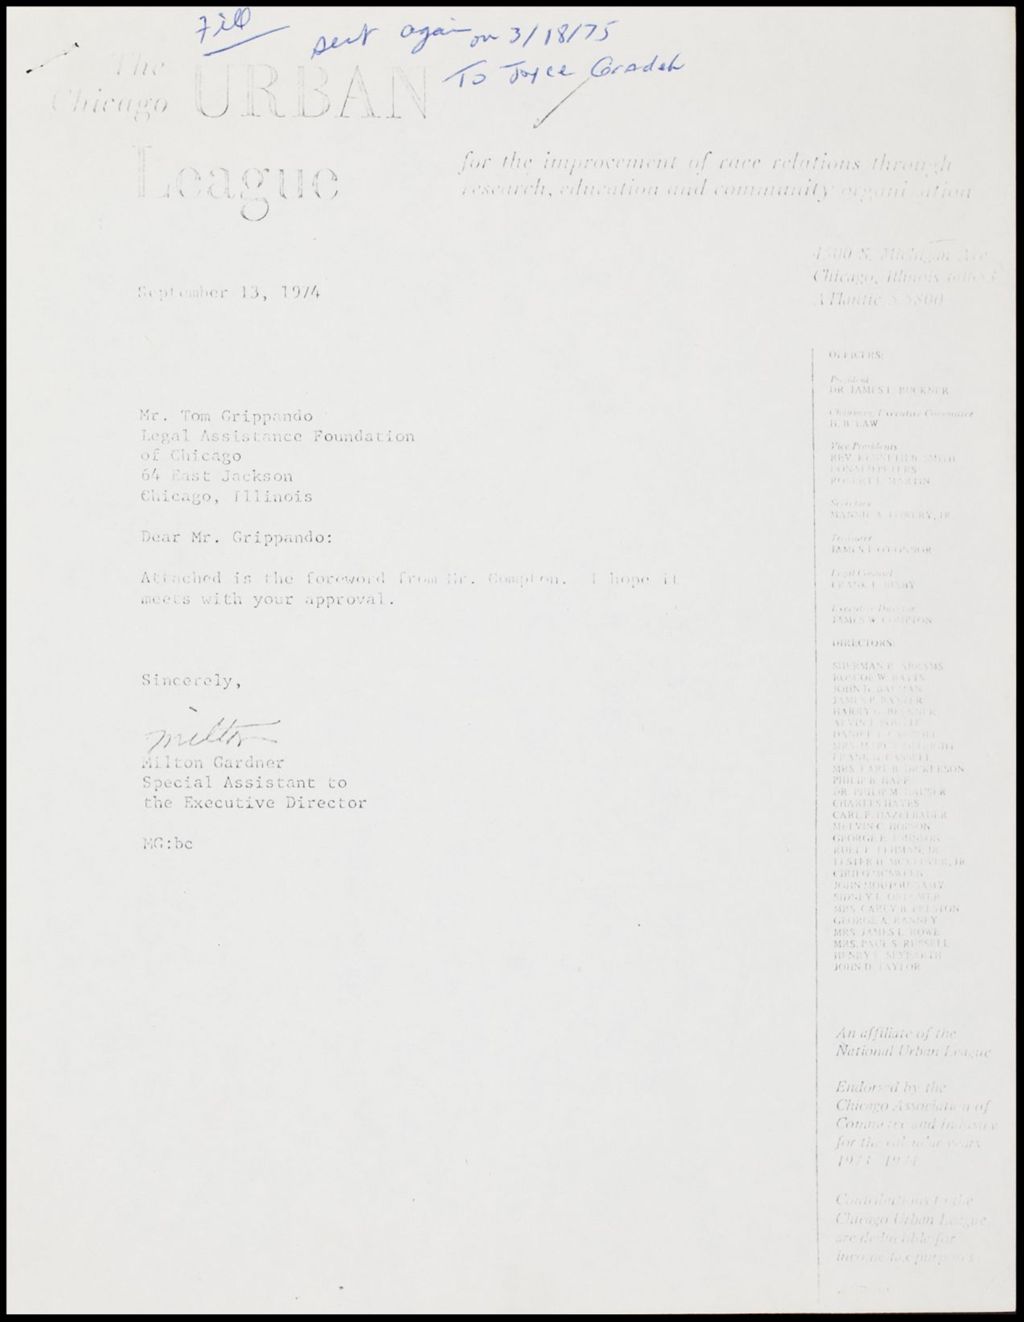 Legal Assistance, 1975 (Folder II-2165)